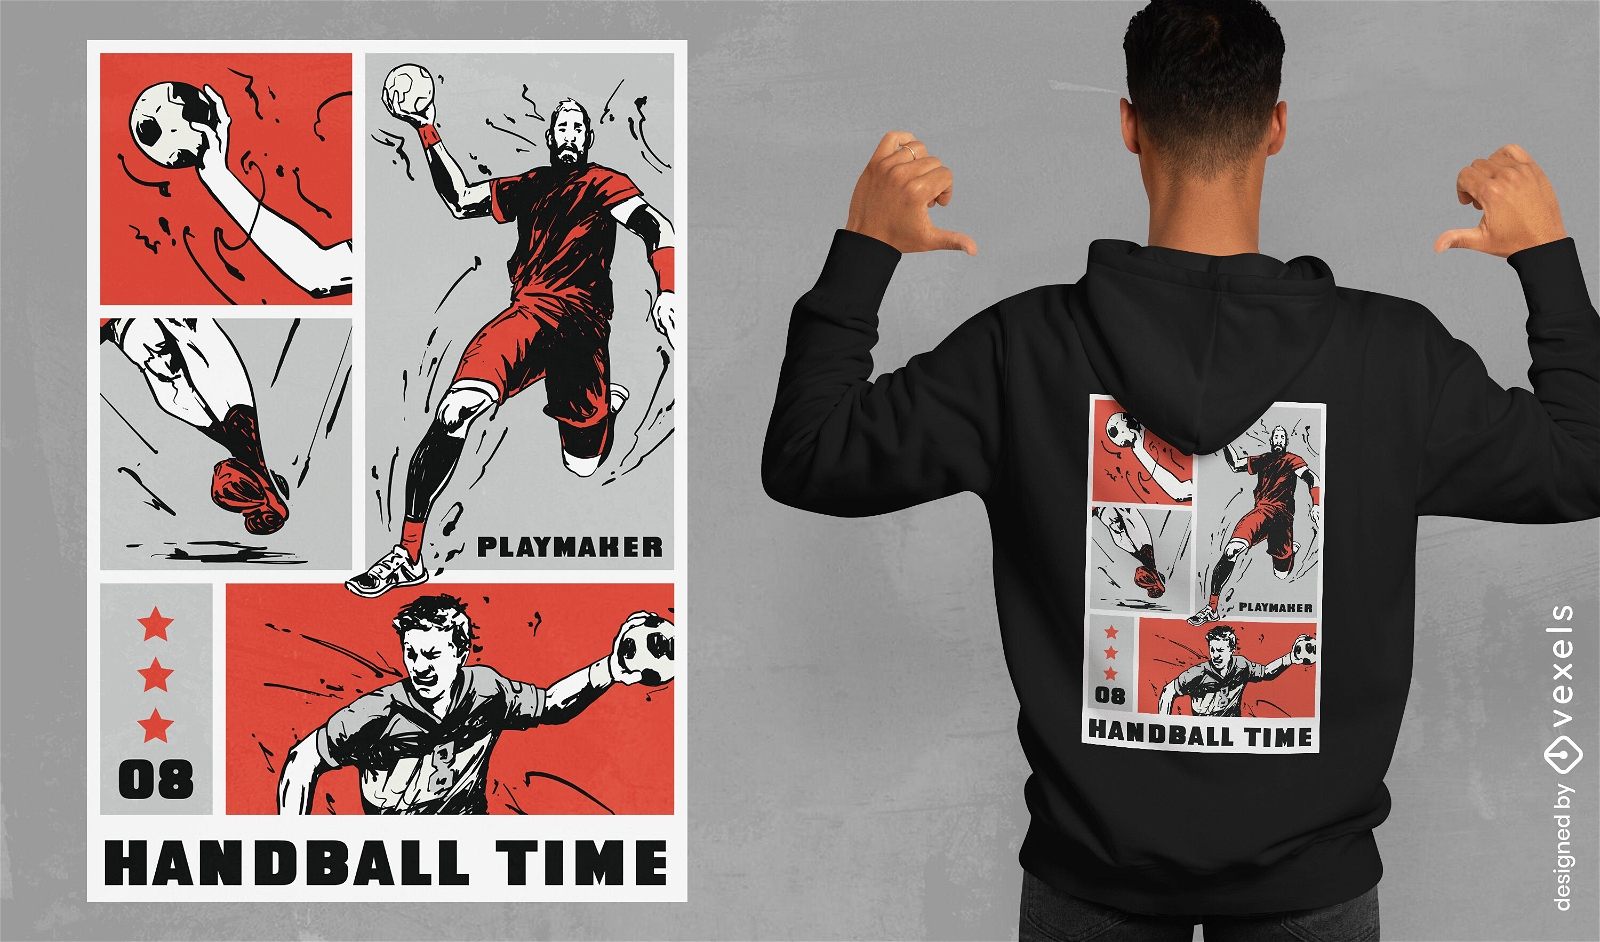 Handball sport players comic t-shirt design